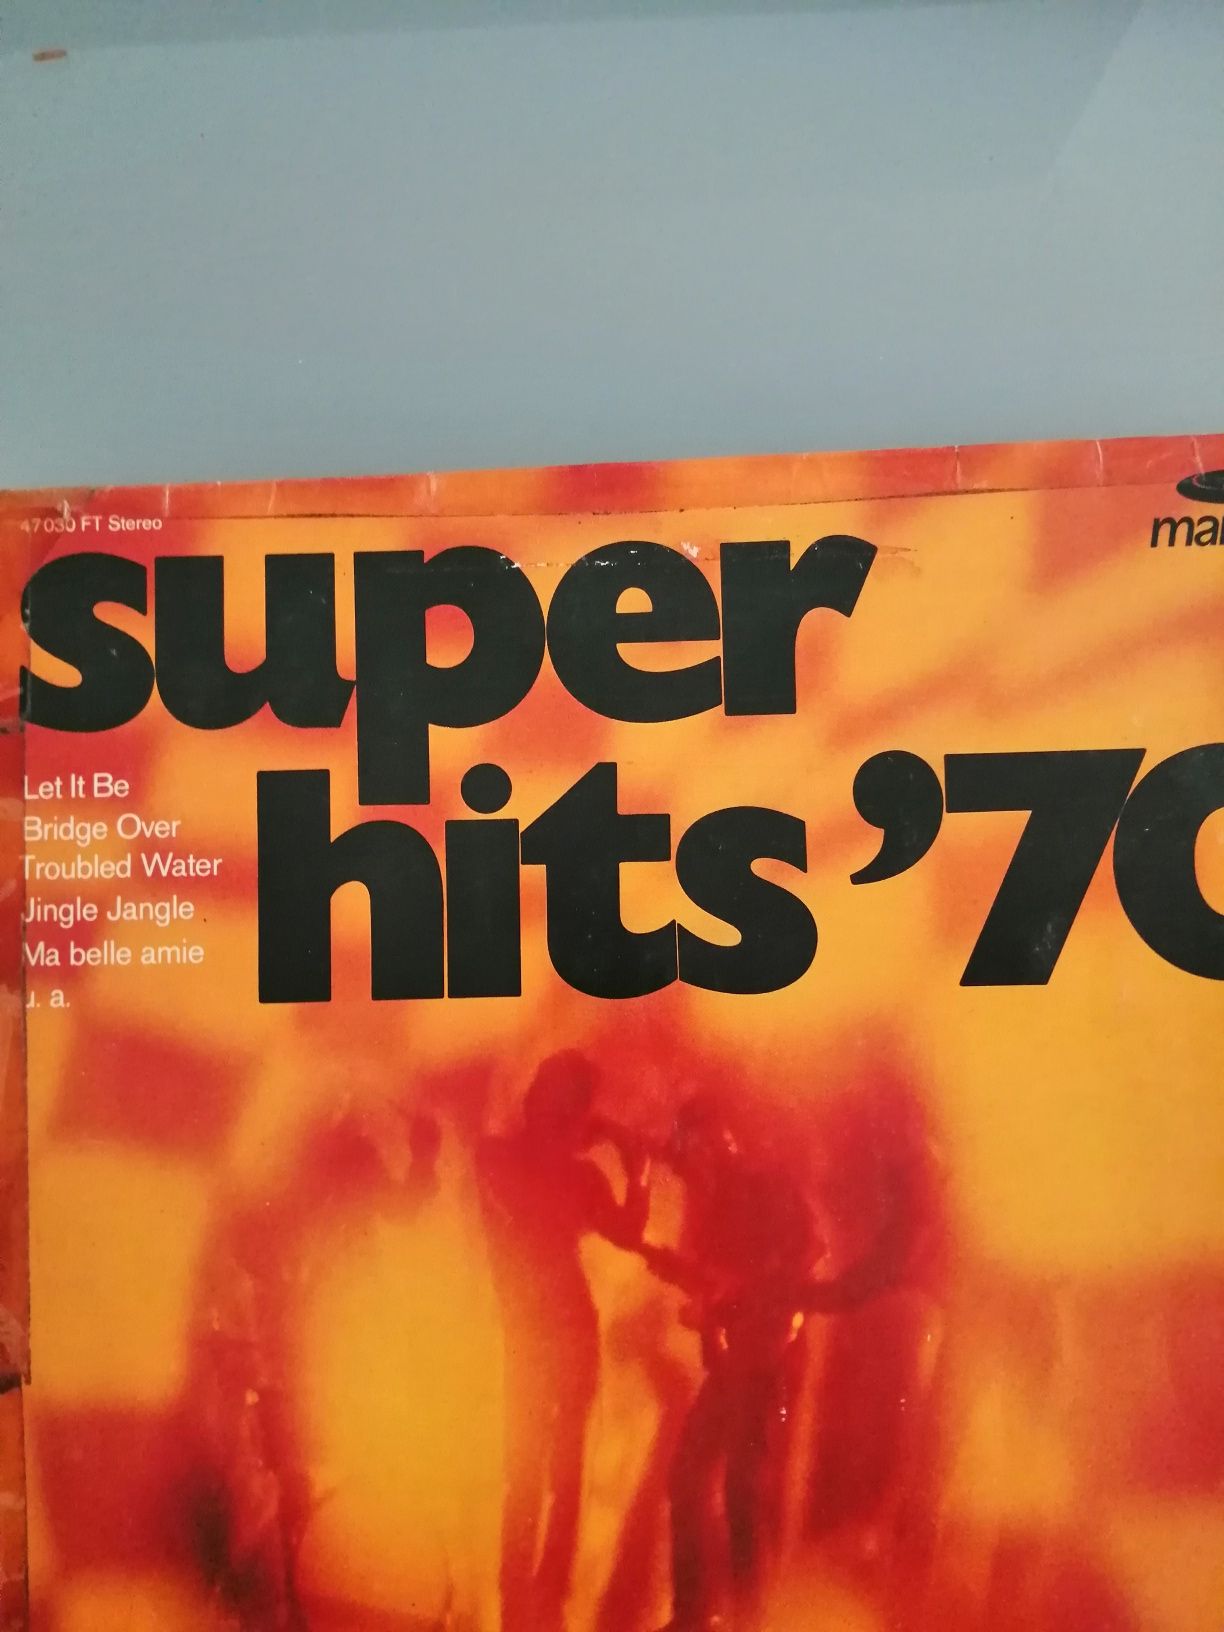 Super Hits 70	(Vinil)	disco de vinil como novo!!